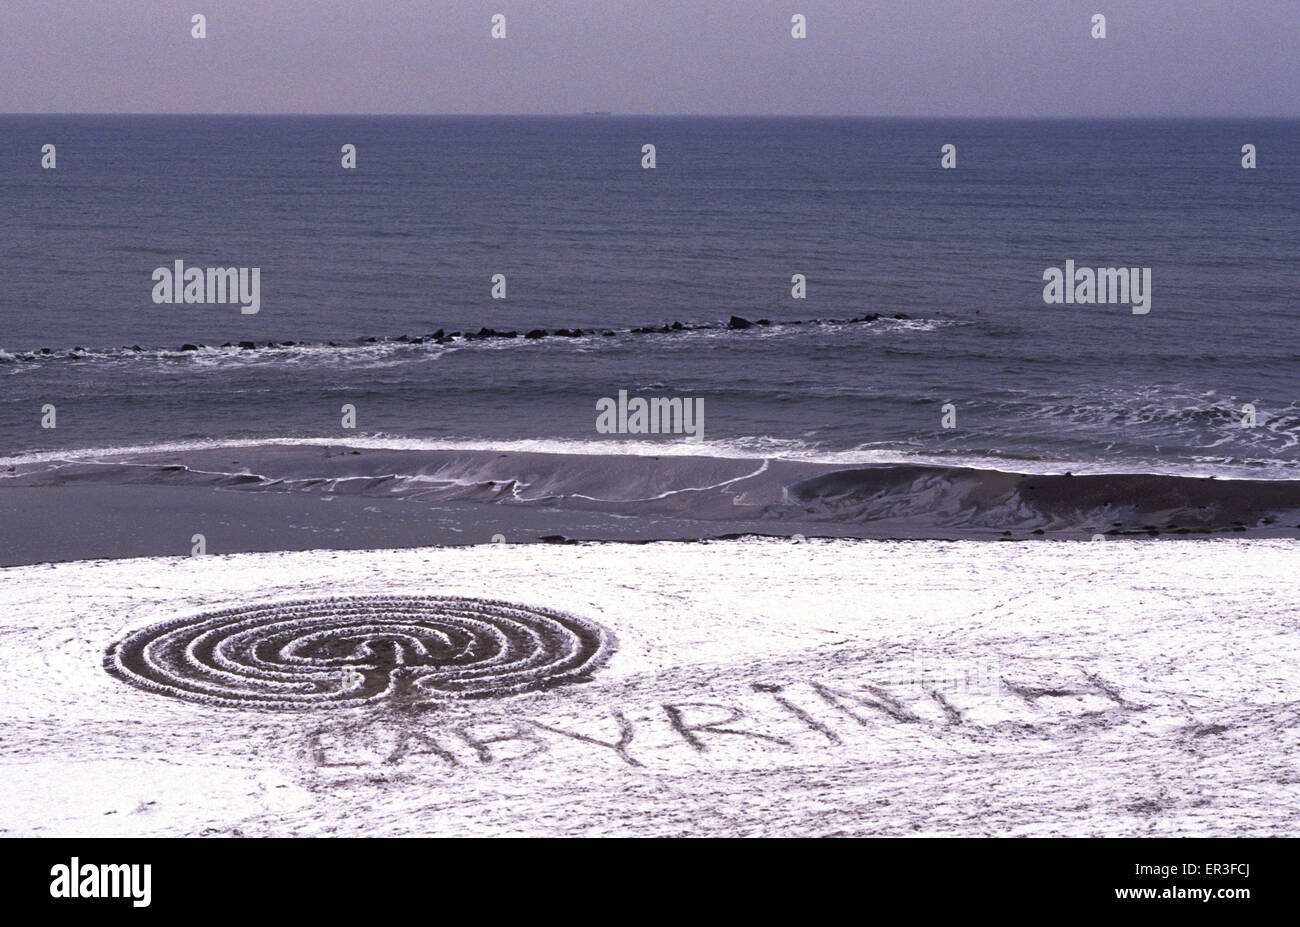 DEU, Germania, Meclemburgo-Pomerania, la spiaggia di Ahrenshoop presso il Mar Baltico, inverno, labirinto nella neve. DEU, DEU Foto Stock